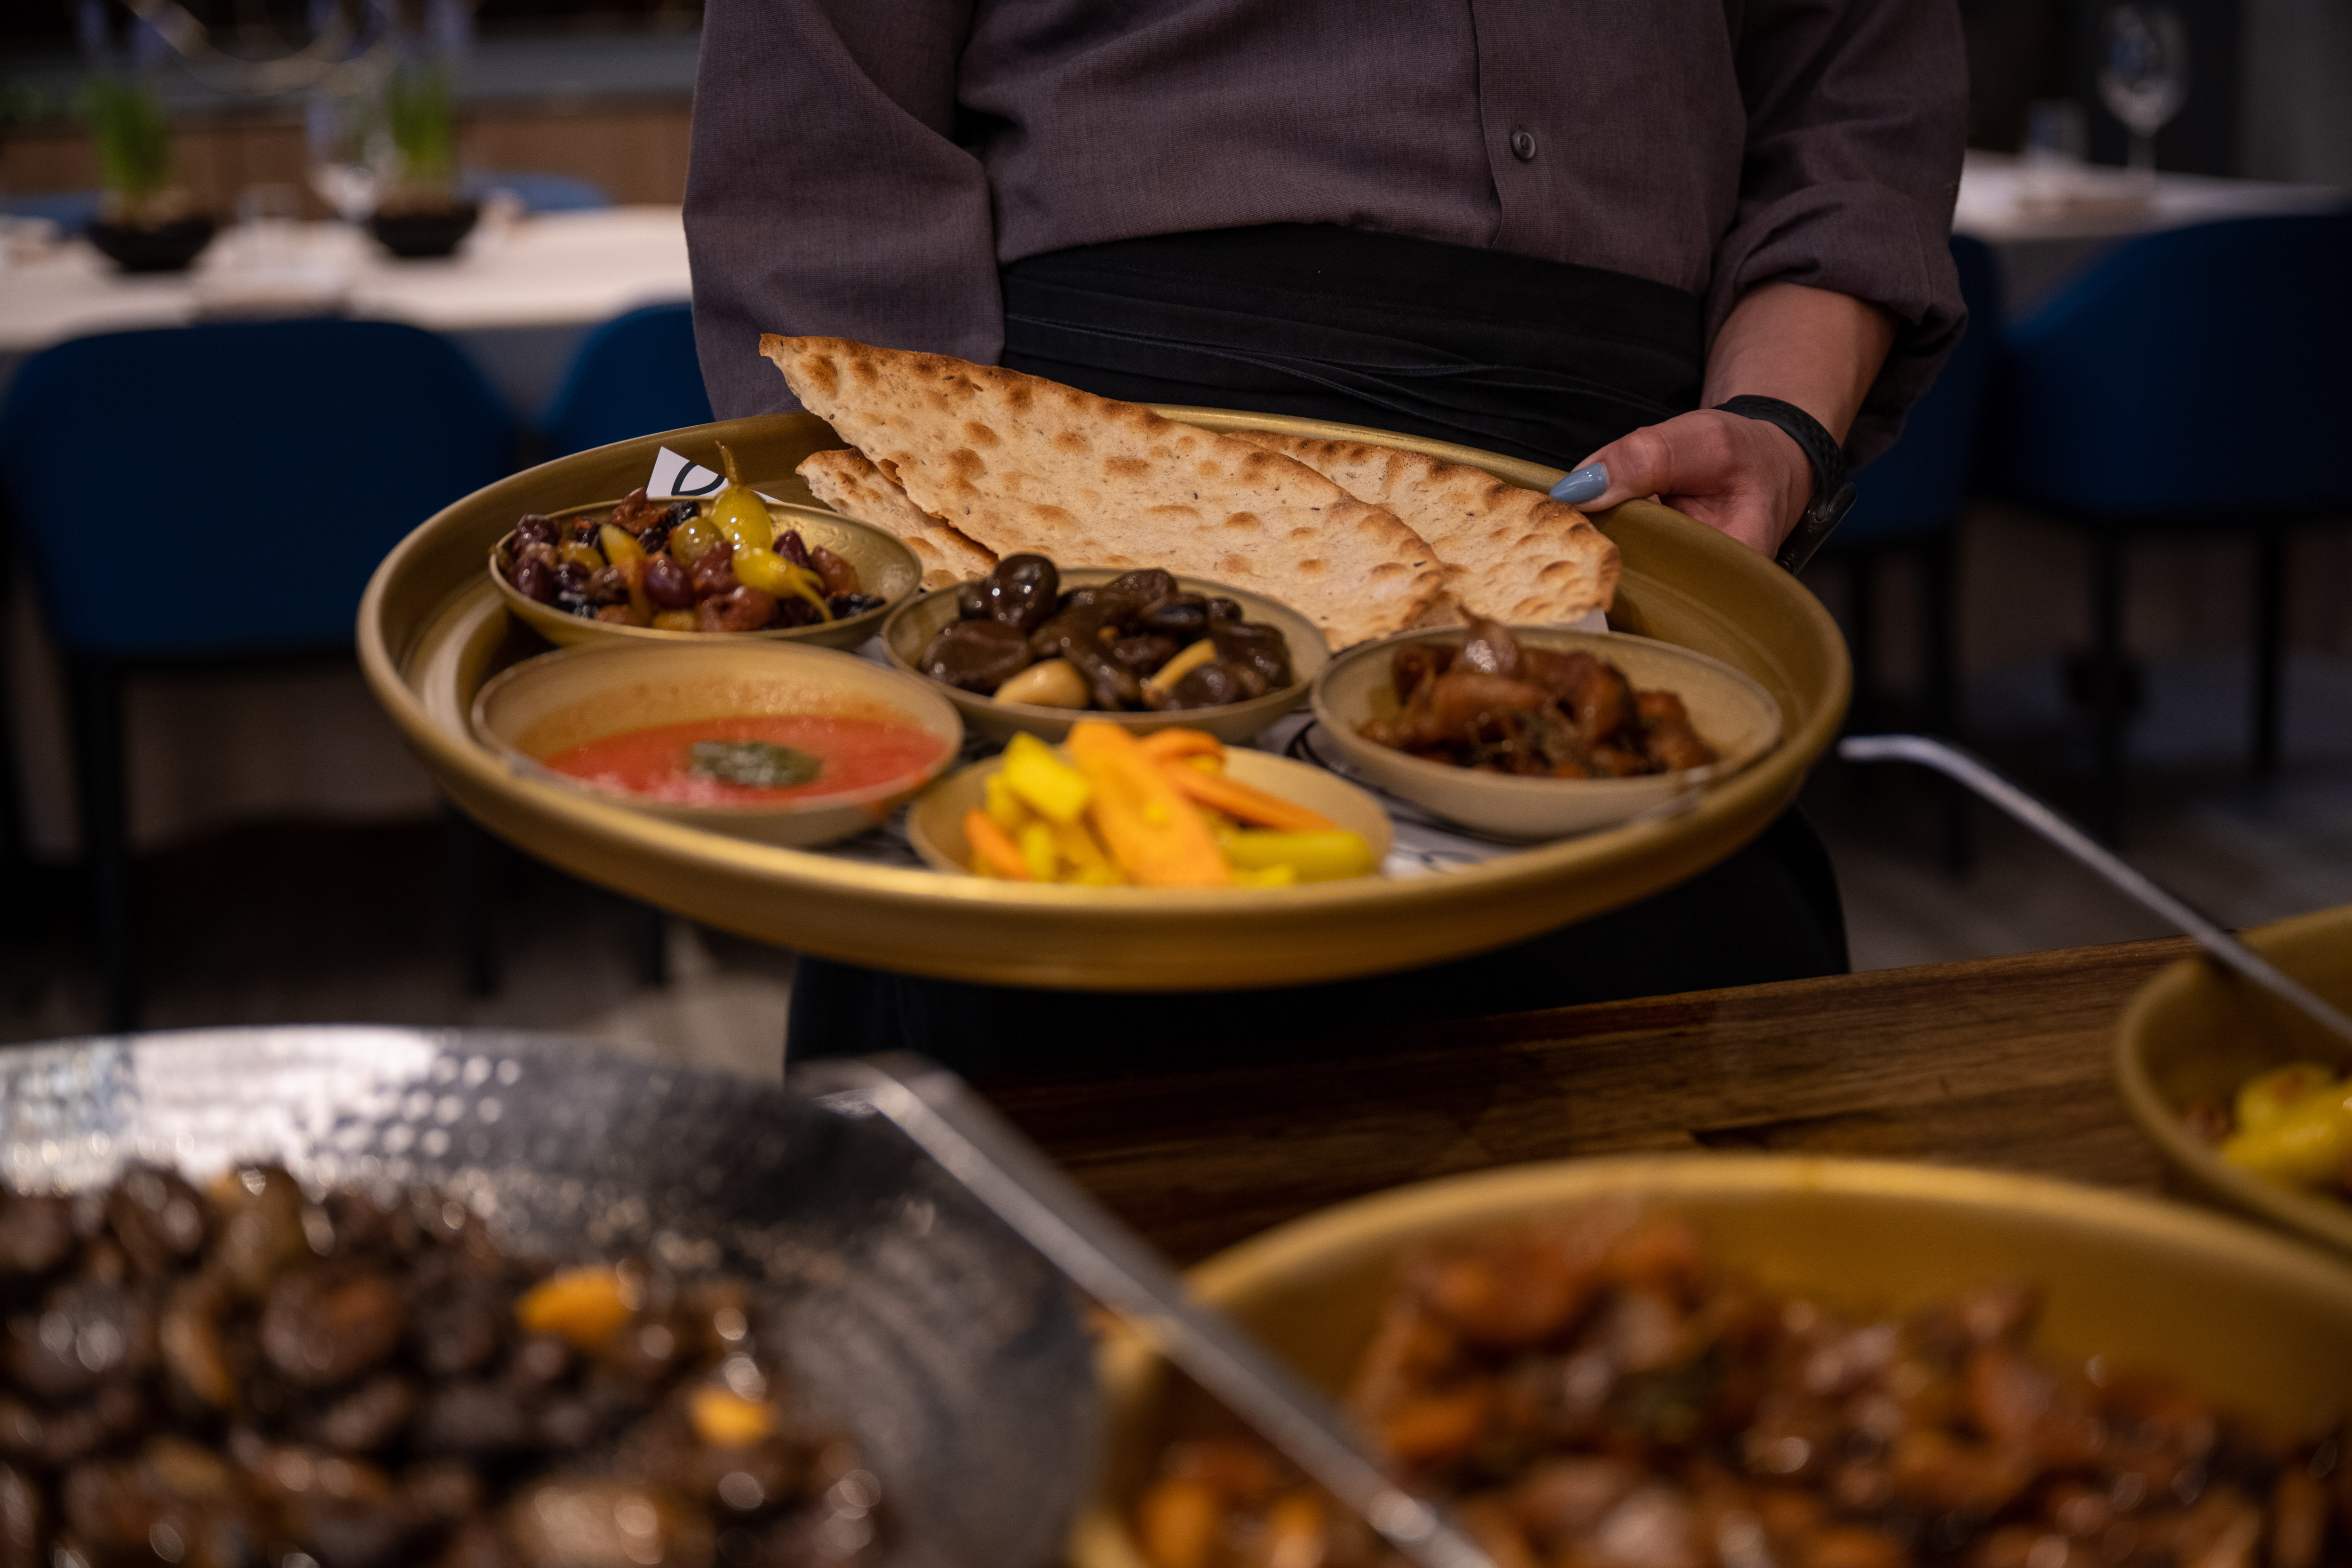 darya restaurant plated food being served